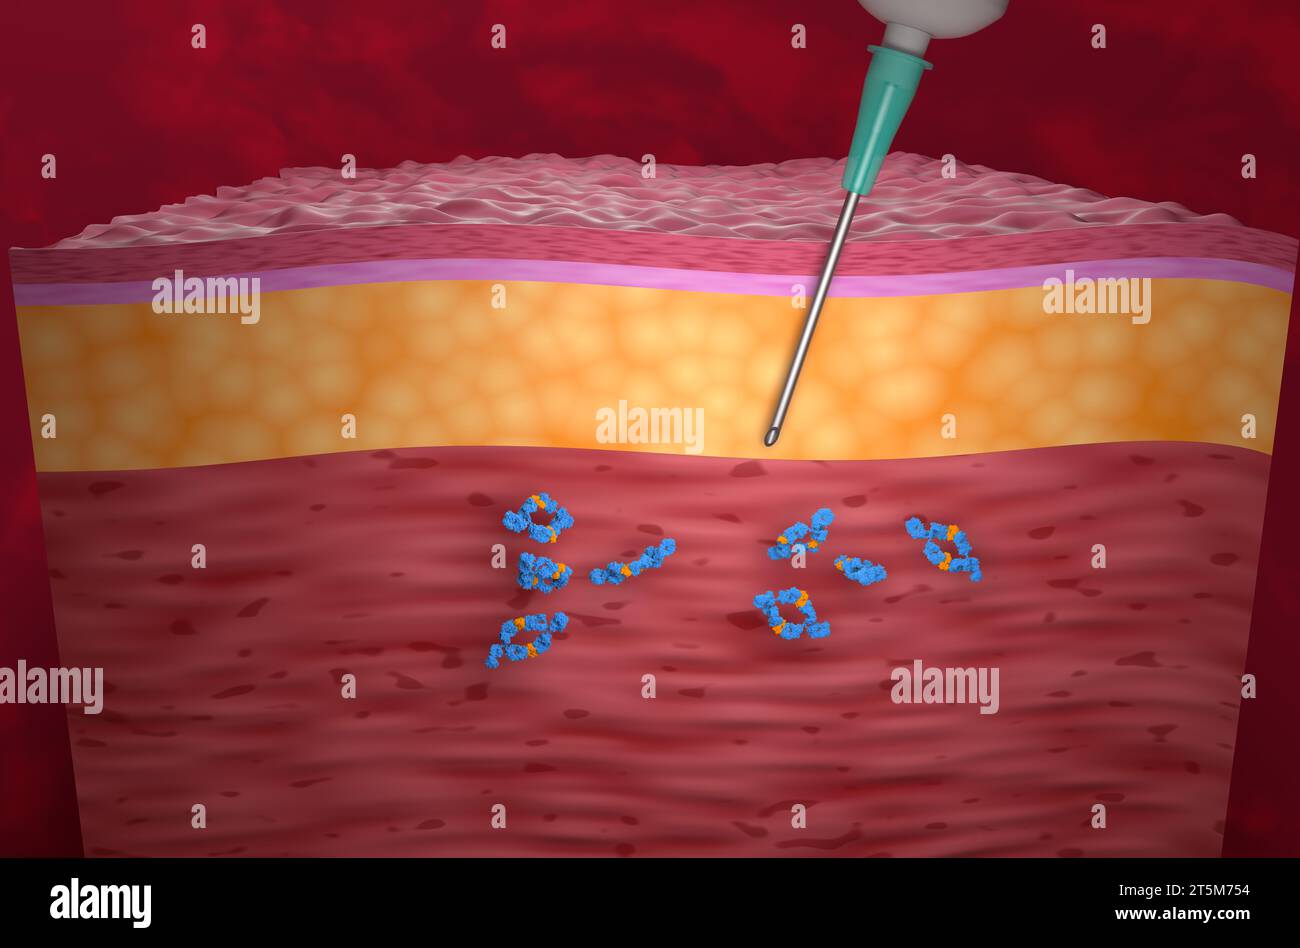 Monoclonal antibody treatment (Adalimumab) - isometric view 3d illustration Stock Photo